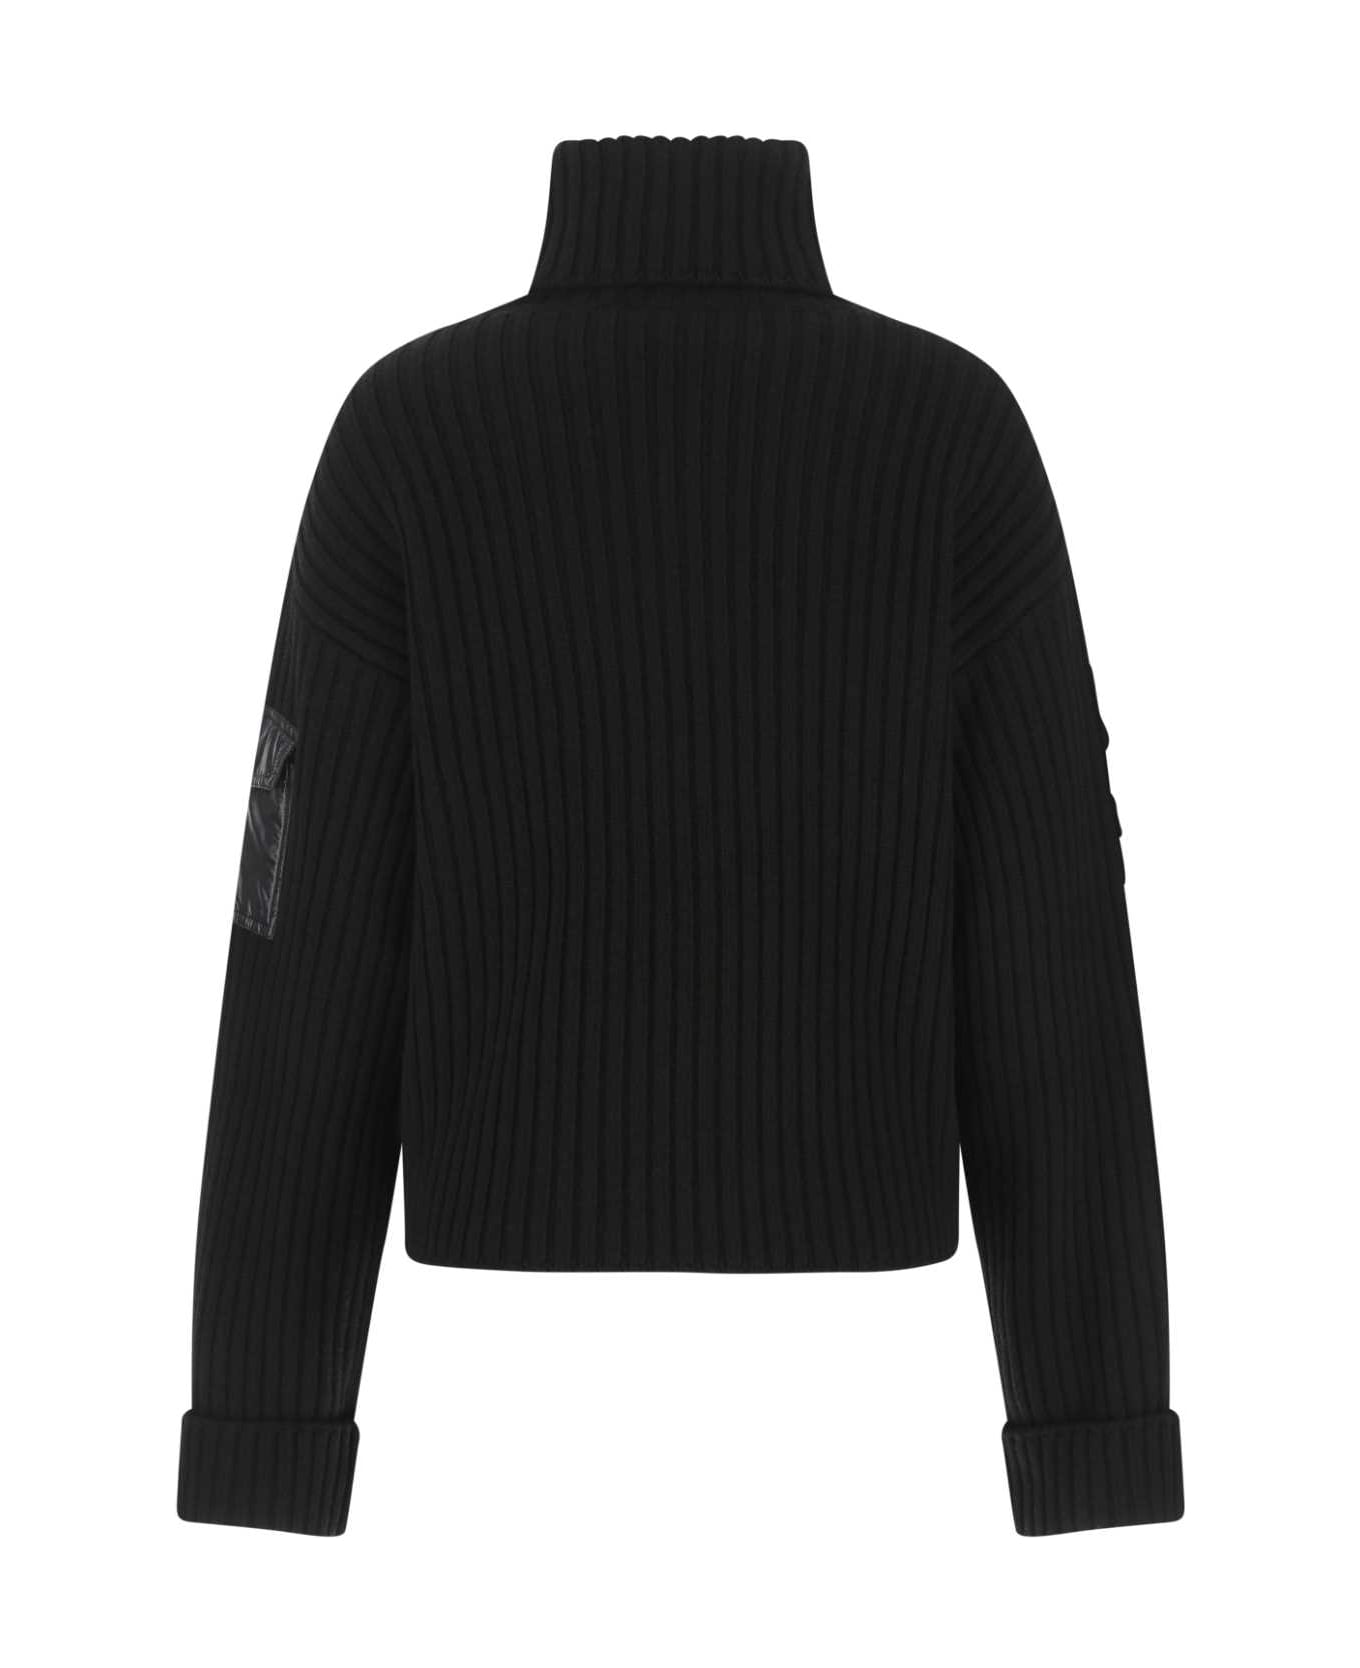 Moncler Black Wool Oversize Sweater - 999